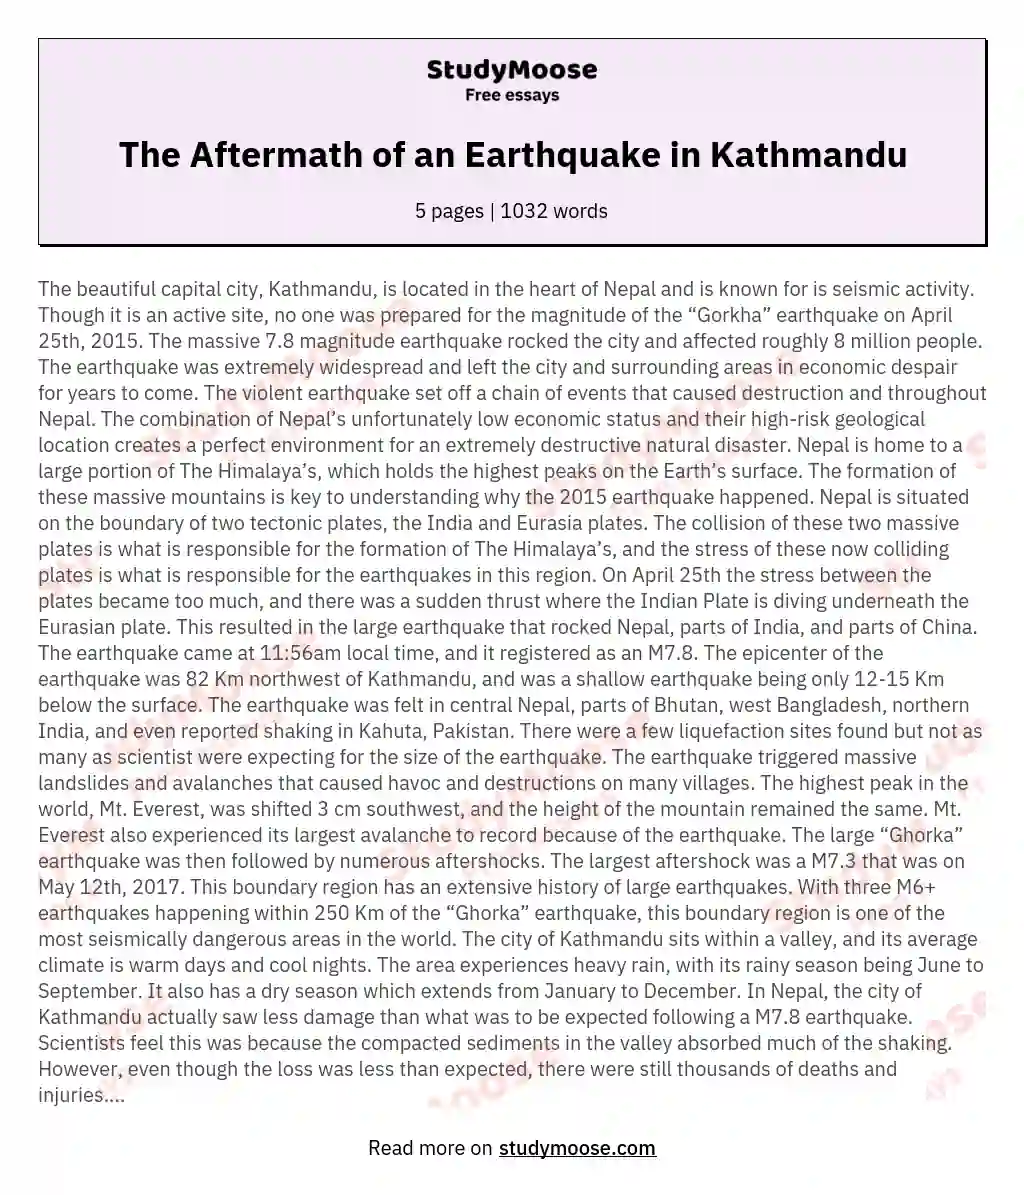 The Aftermath of an Earthquake in Kathmandu